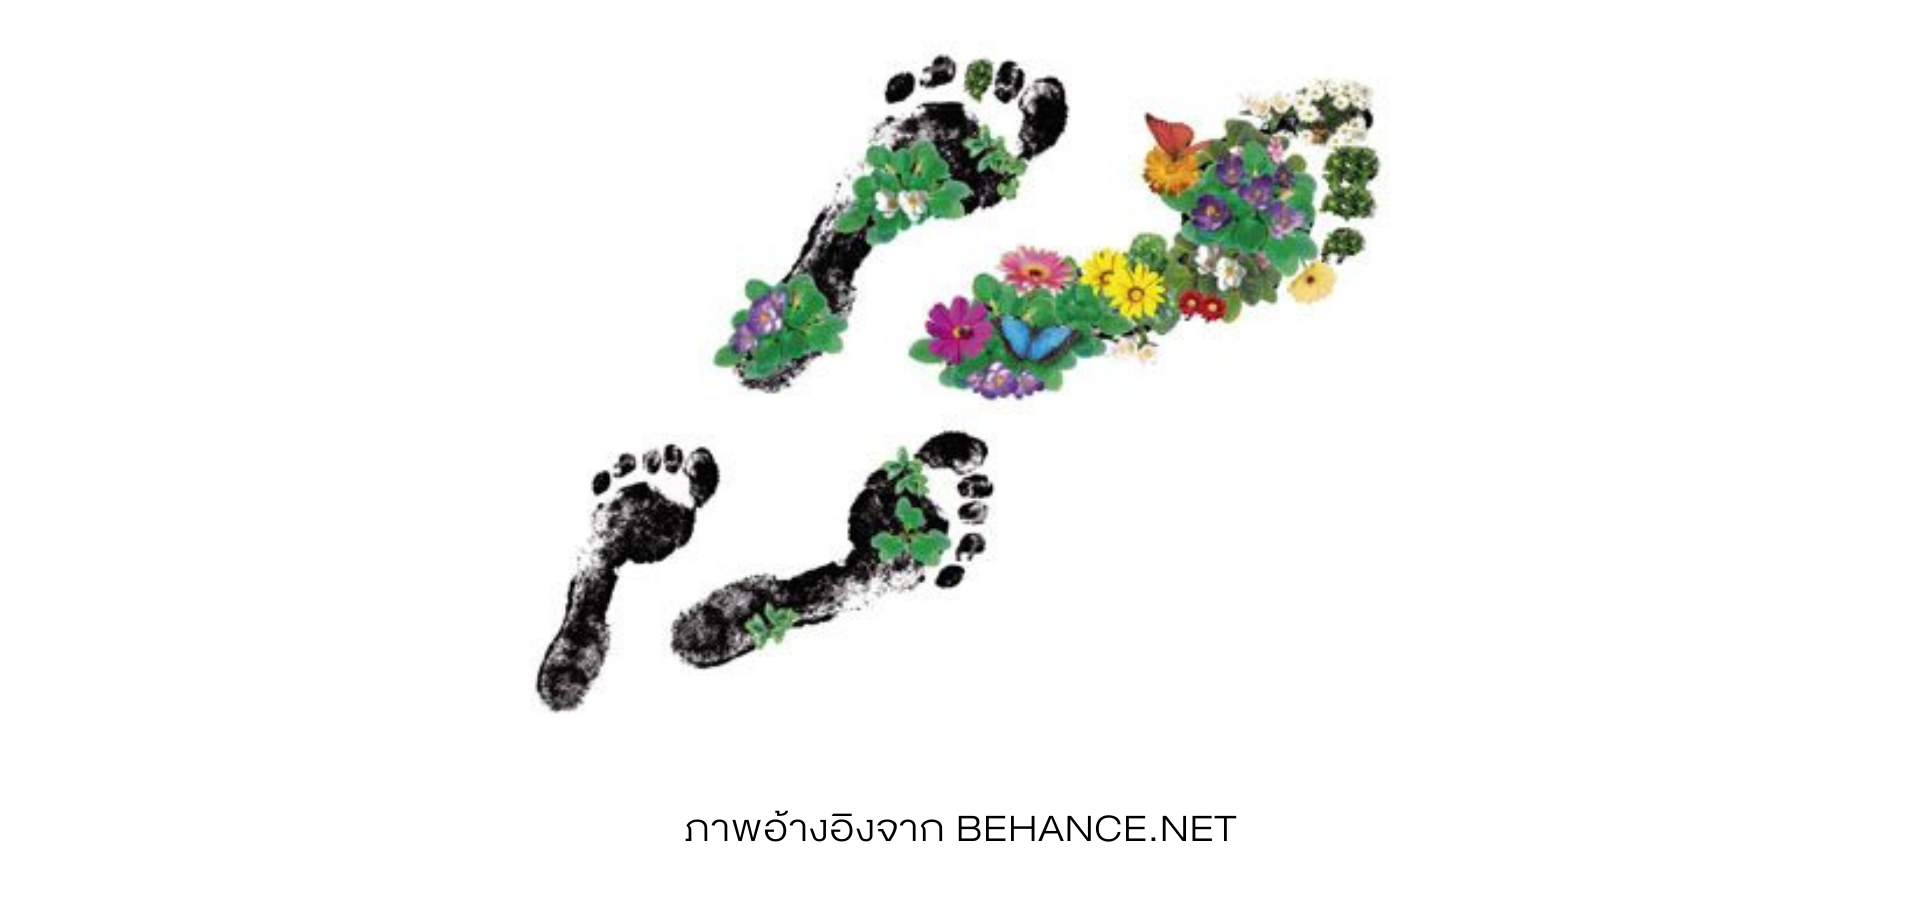 carbon footprint-แบรนด์เนมมือสอง มือ 2 sf brandname ของแท้-behance.net